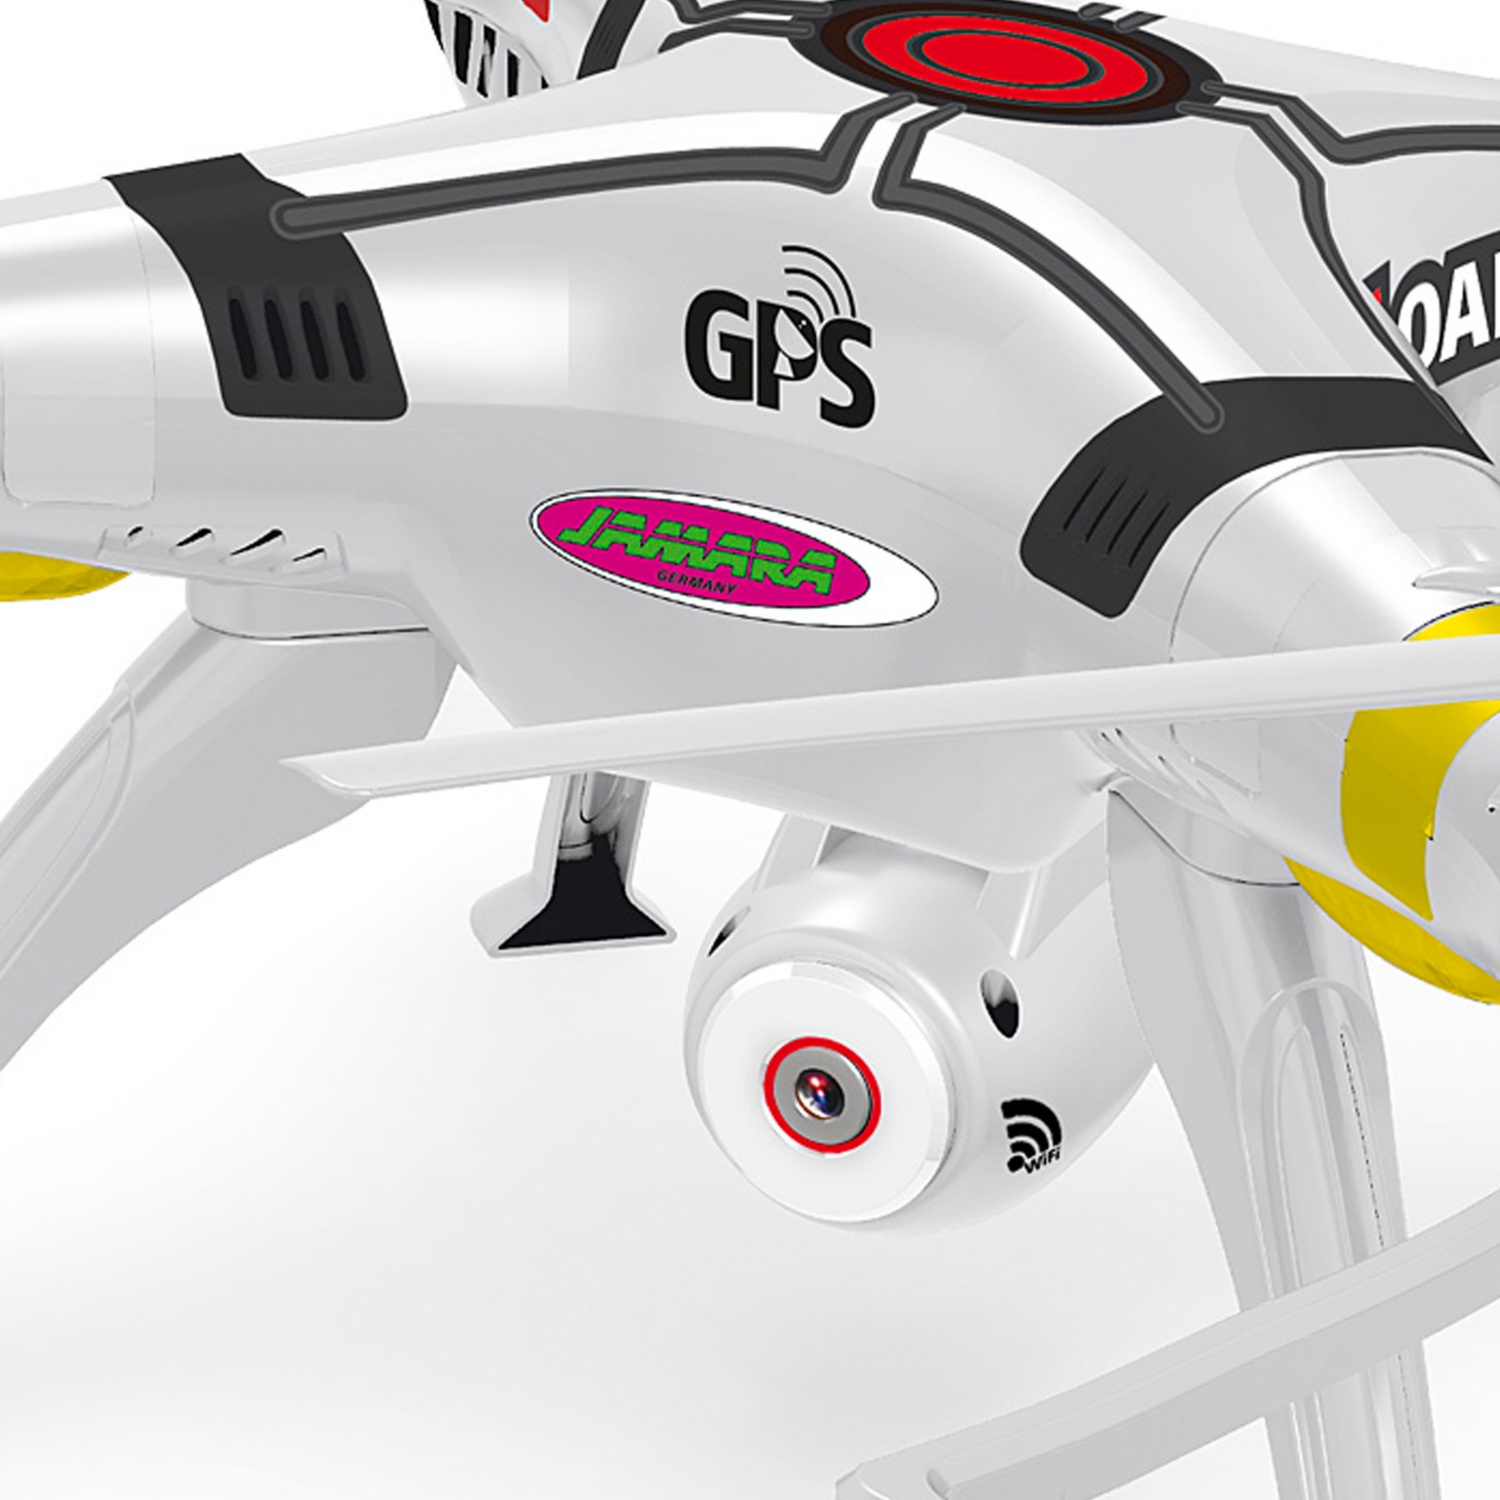 Drohne Payload GPS